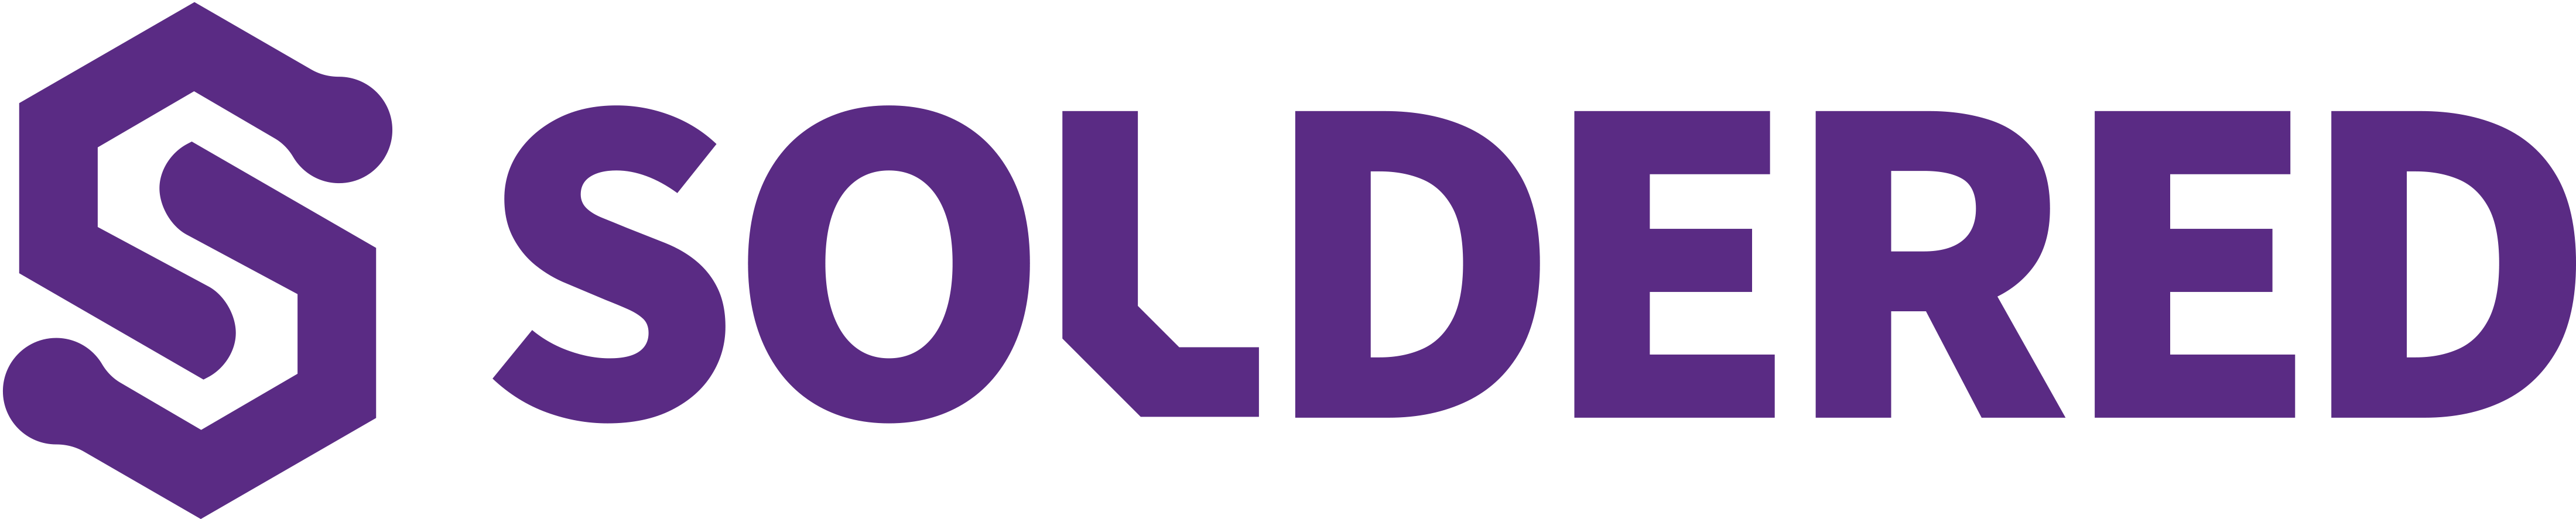 soldered-logo